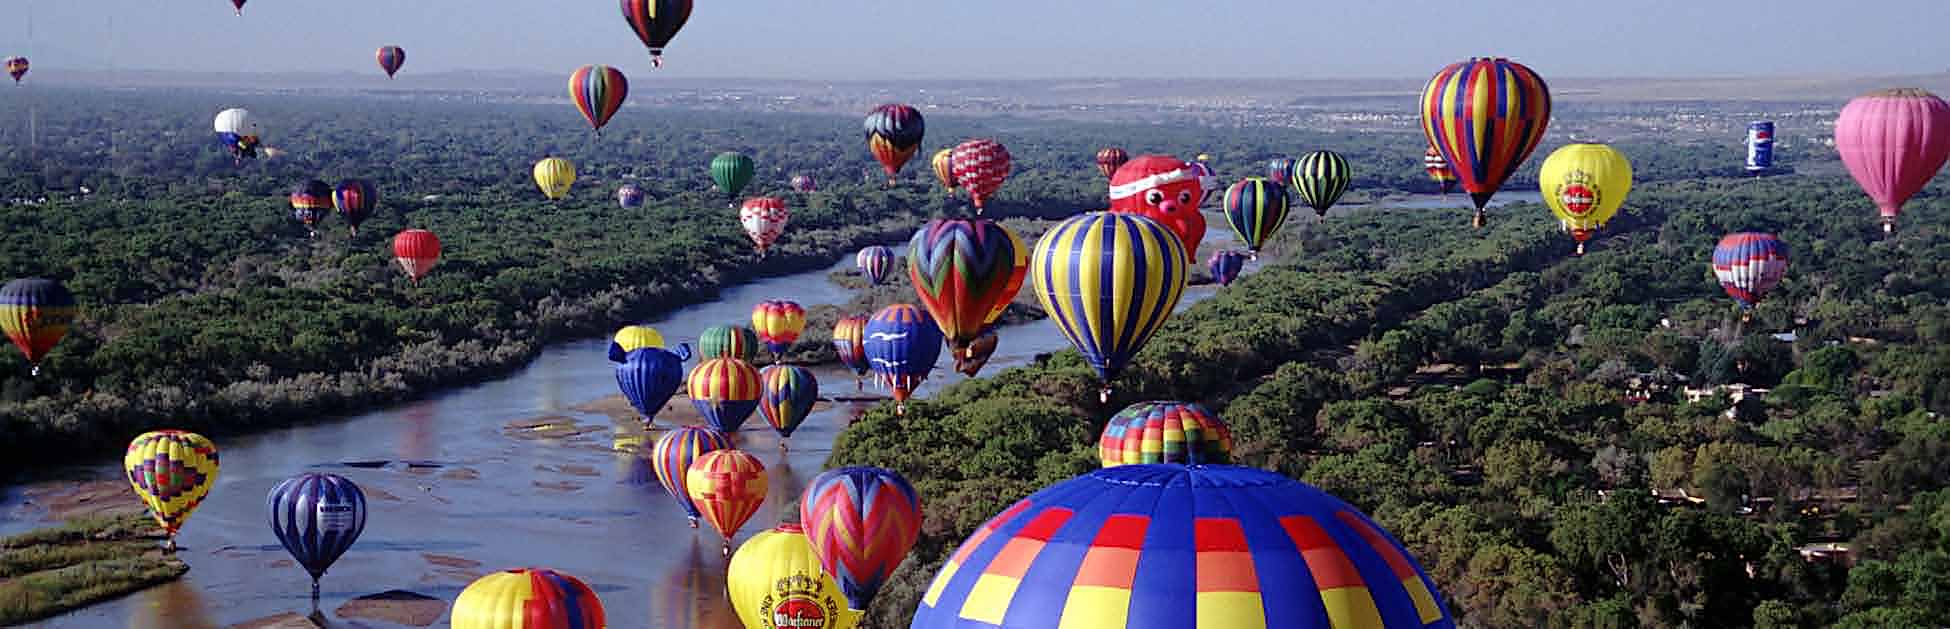 Hot Air Balloons over a river